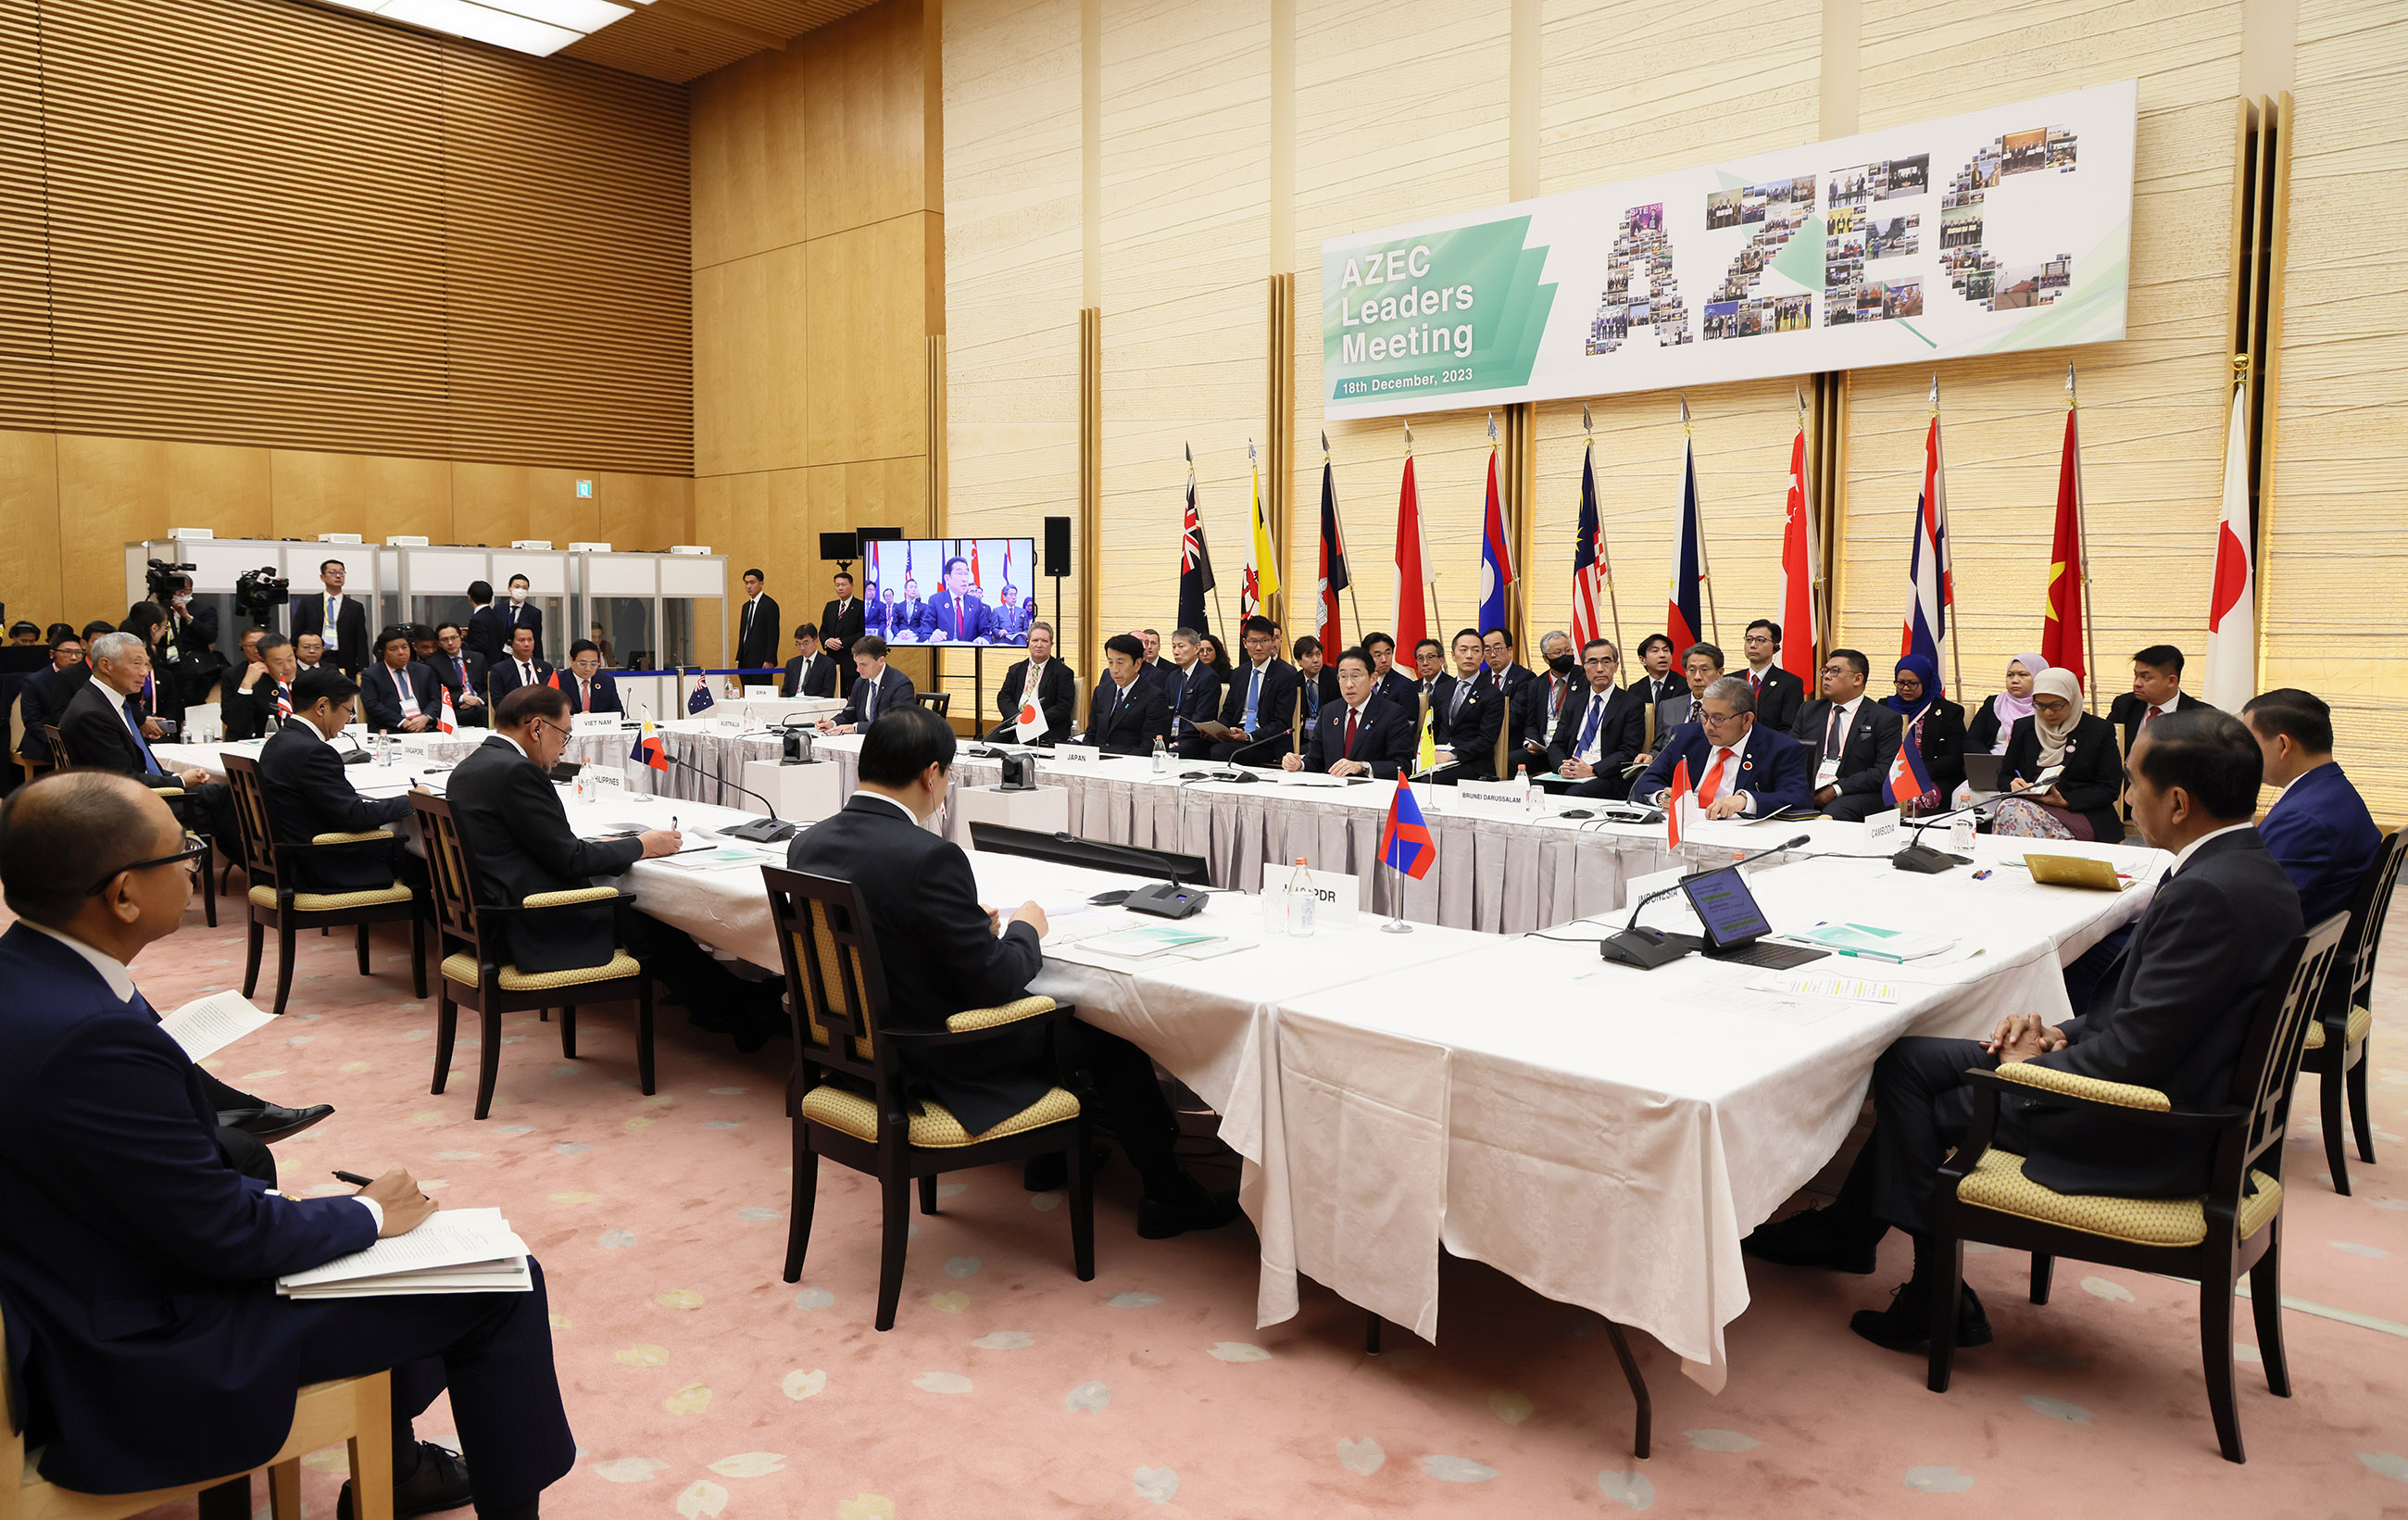 Prime Minister Kishida attending the AZEC Leaders’ meeting (9)